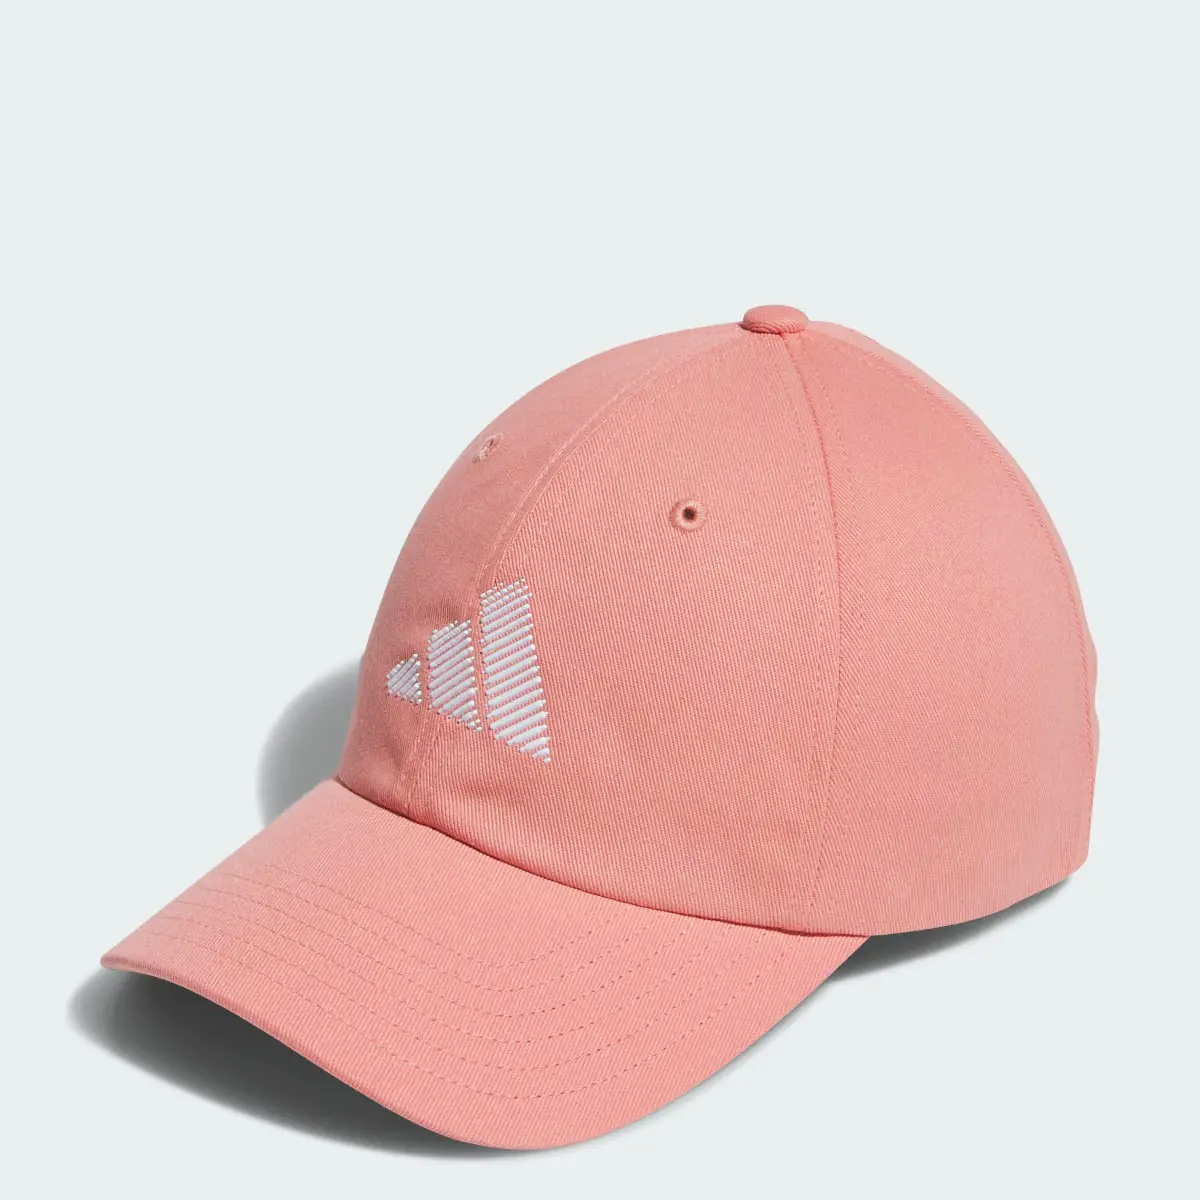 Adidas Criscross Golf Hat. 1